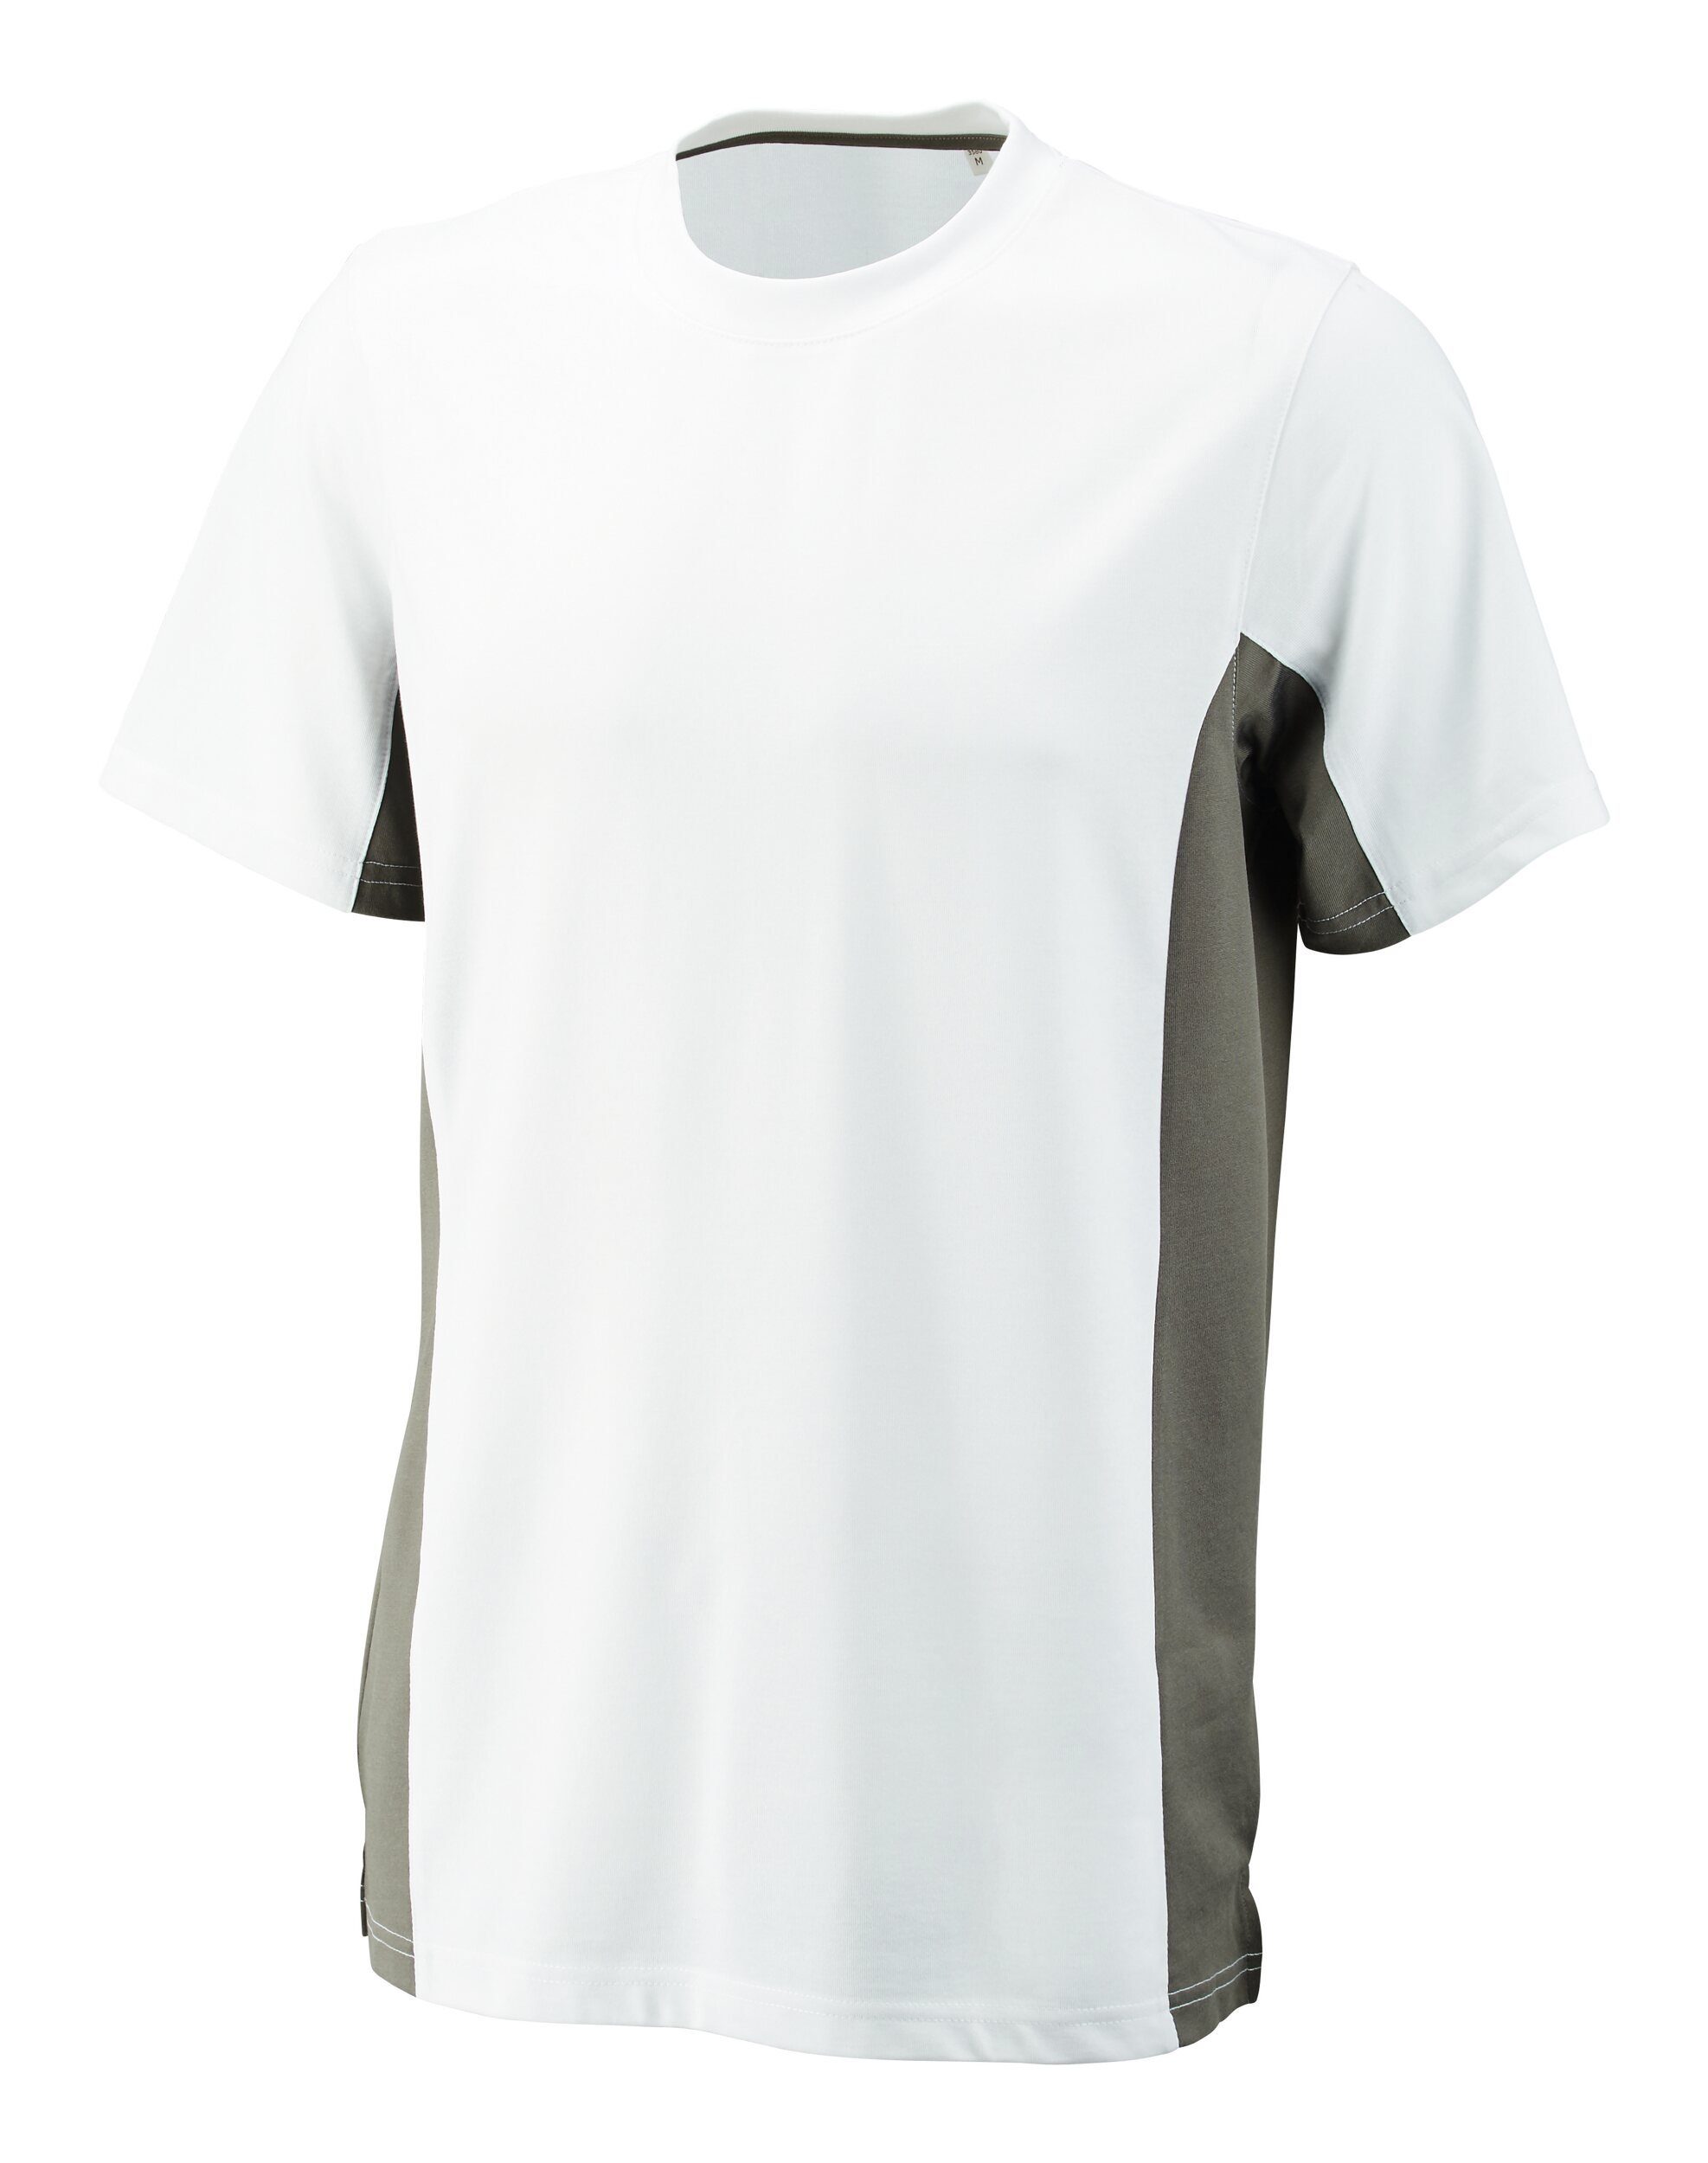 Promodoro Funktionsshirt T-shirt Function Contrast, Größe 3XL, weiß-grau